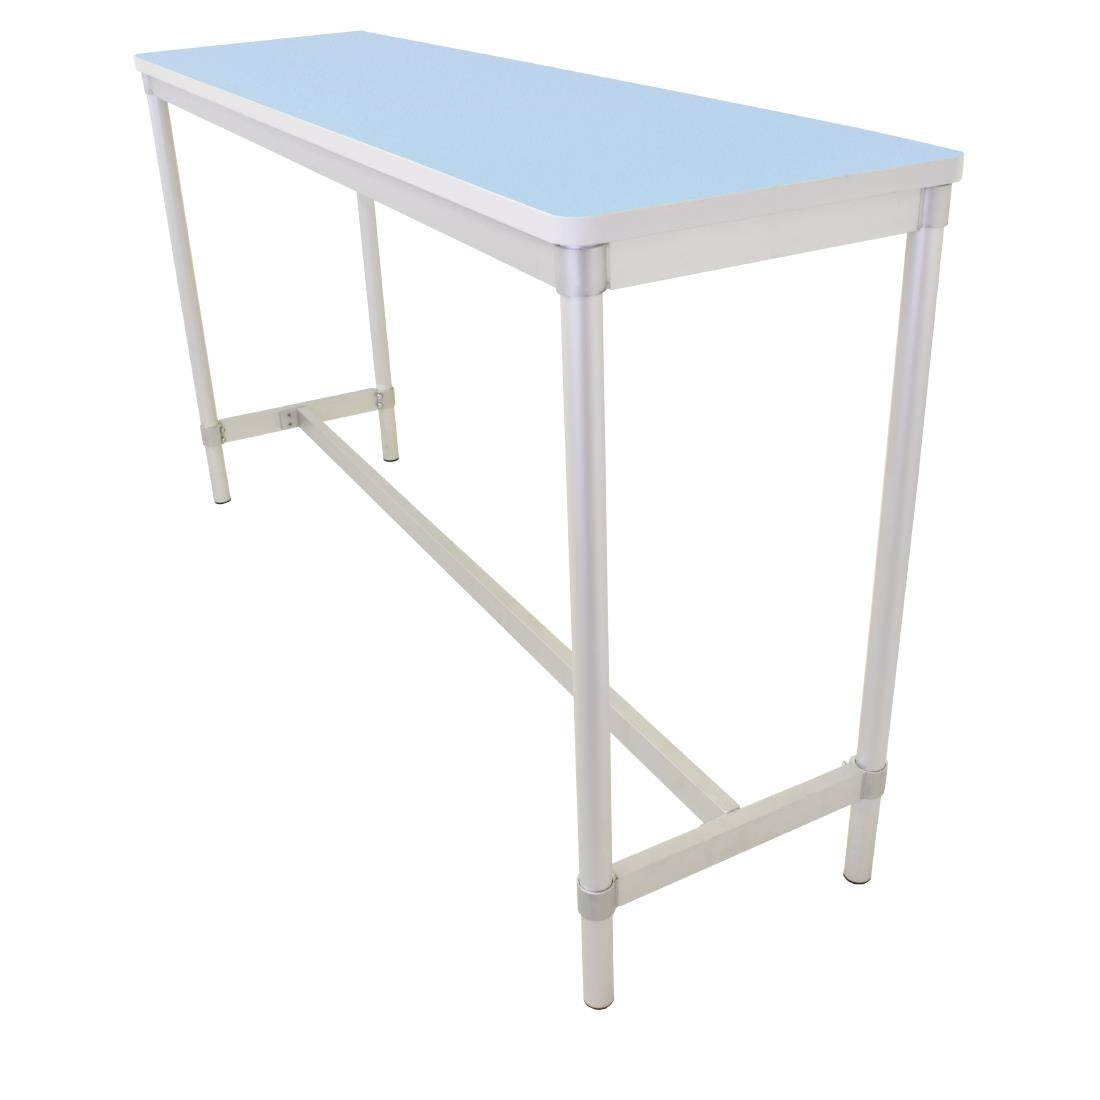 DG130-PB Gopak Enviro Indoor Pastel Blue Rectangle Poseur Table 1800mm